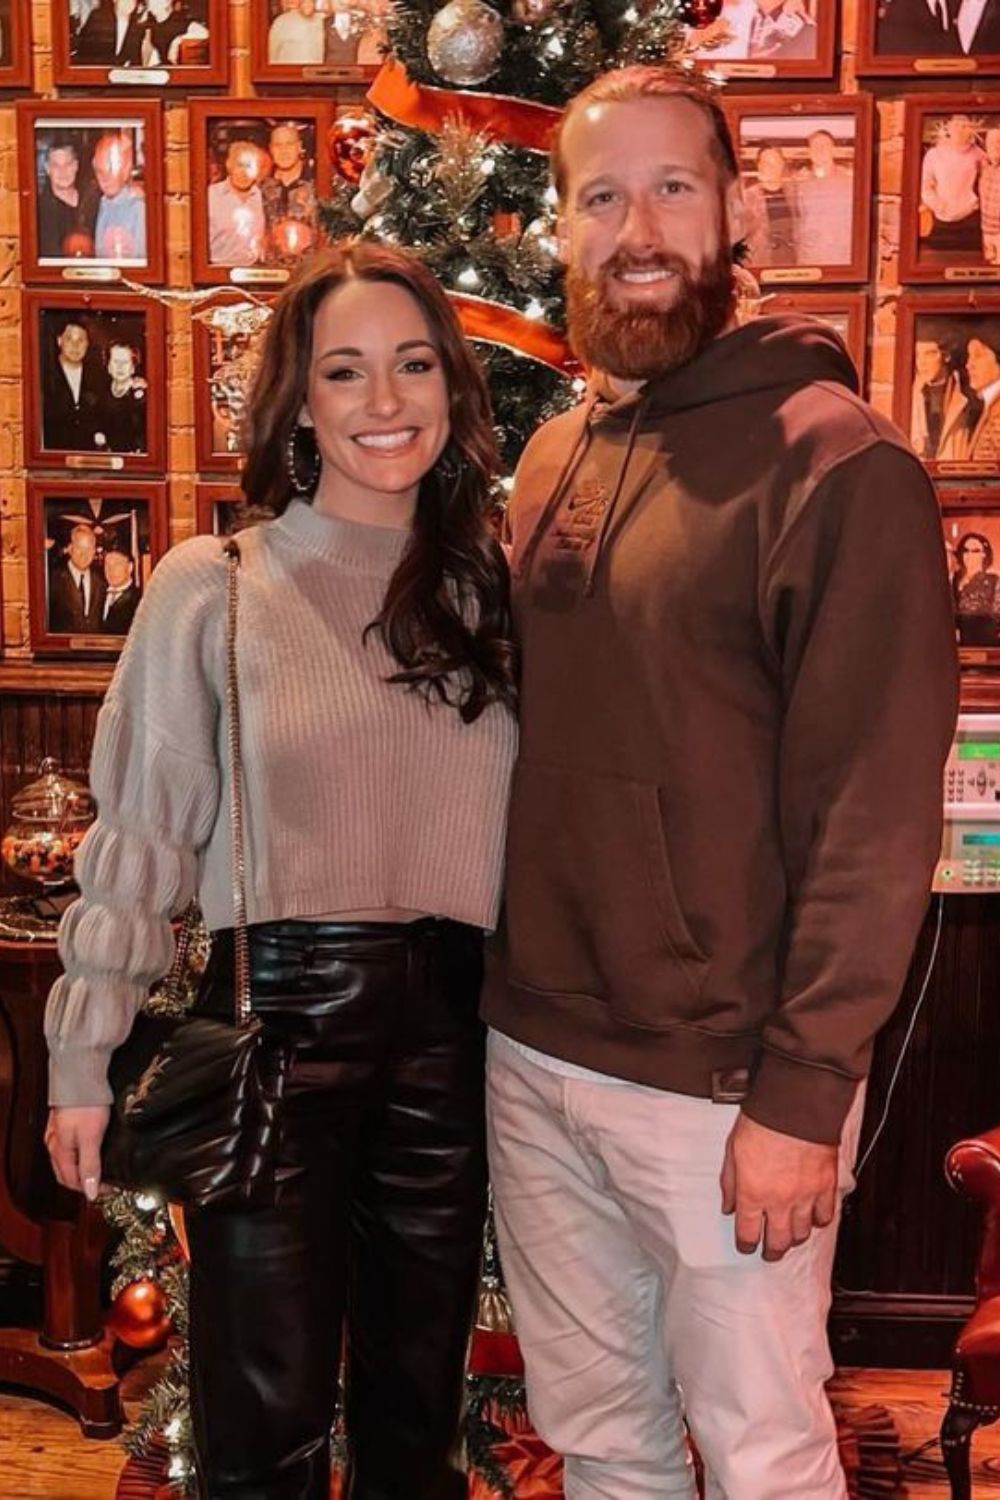 NFL Player hayden hurst With His Girlfriend Brooke Sharp During Christmas (Source: Instagram)